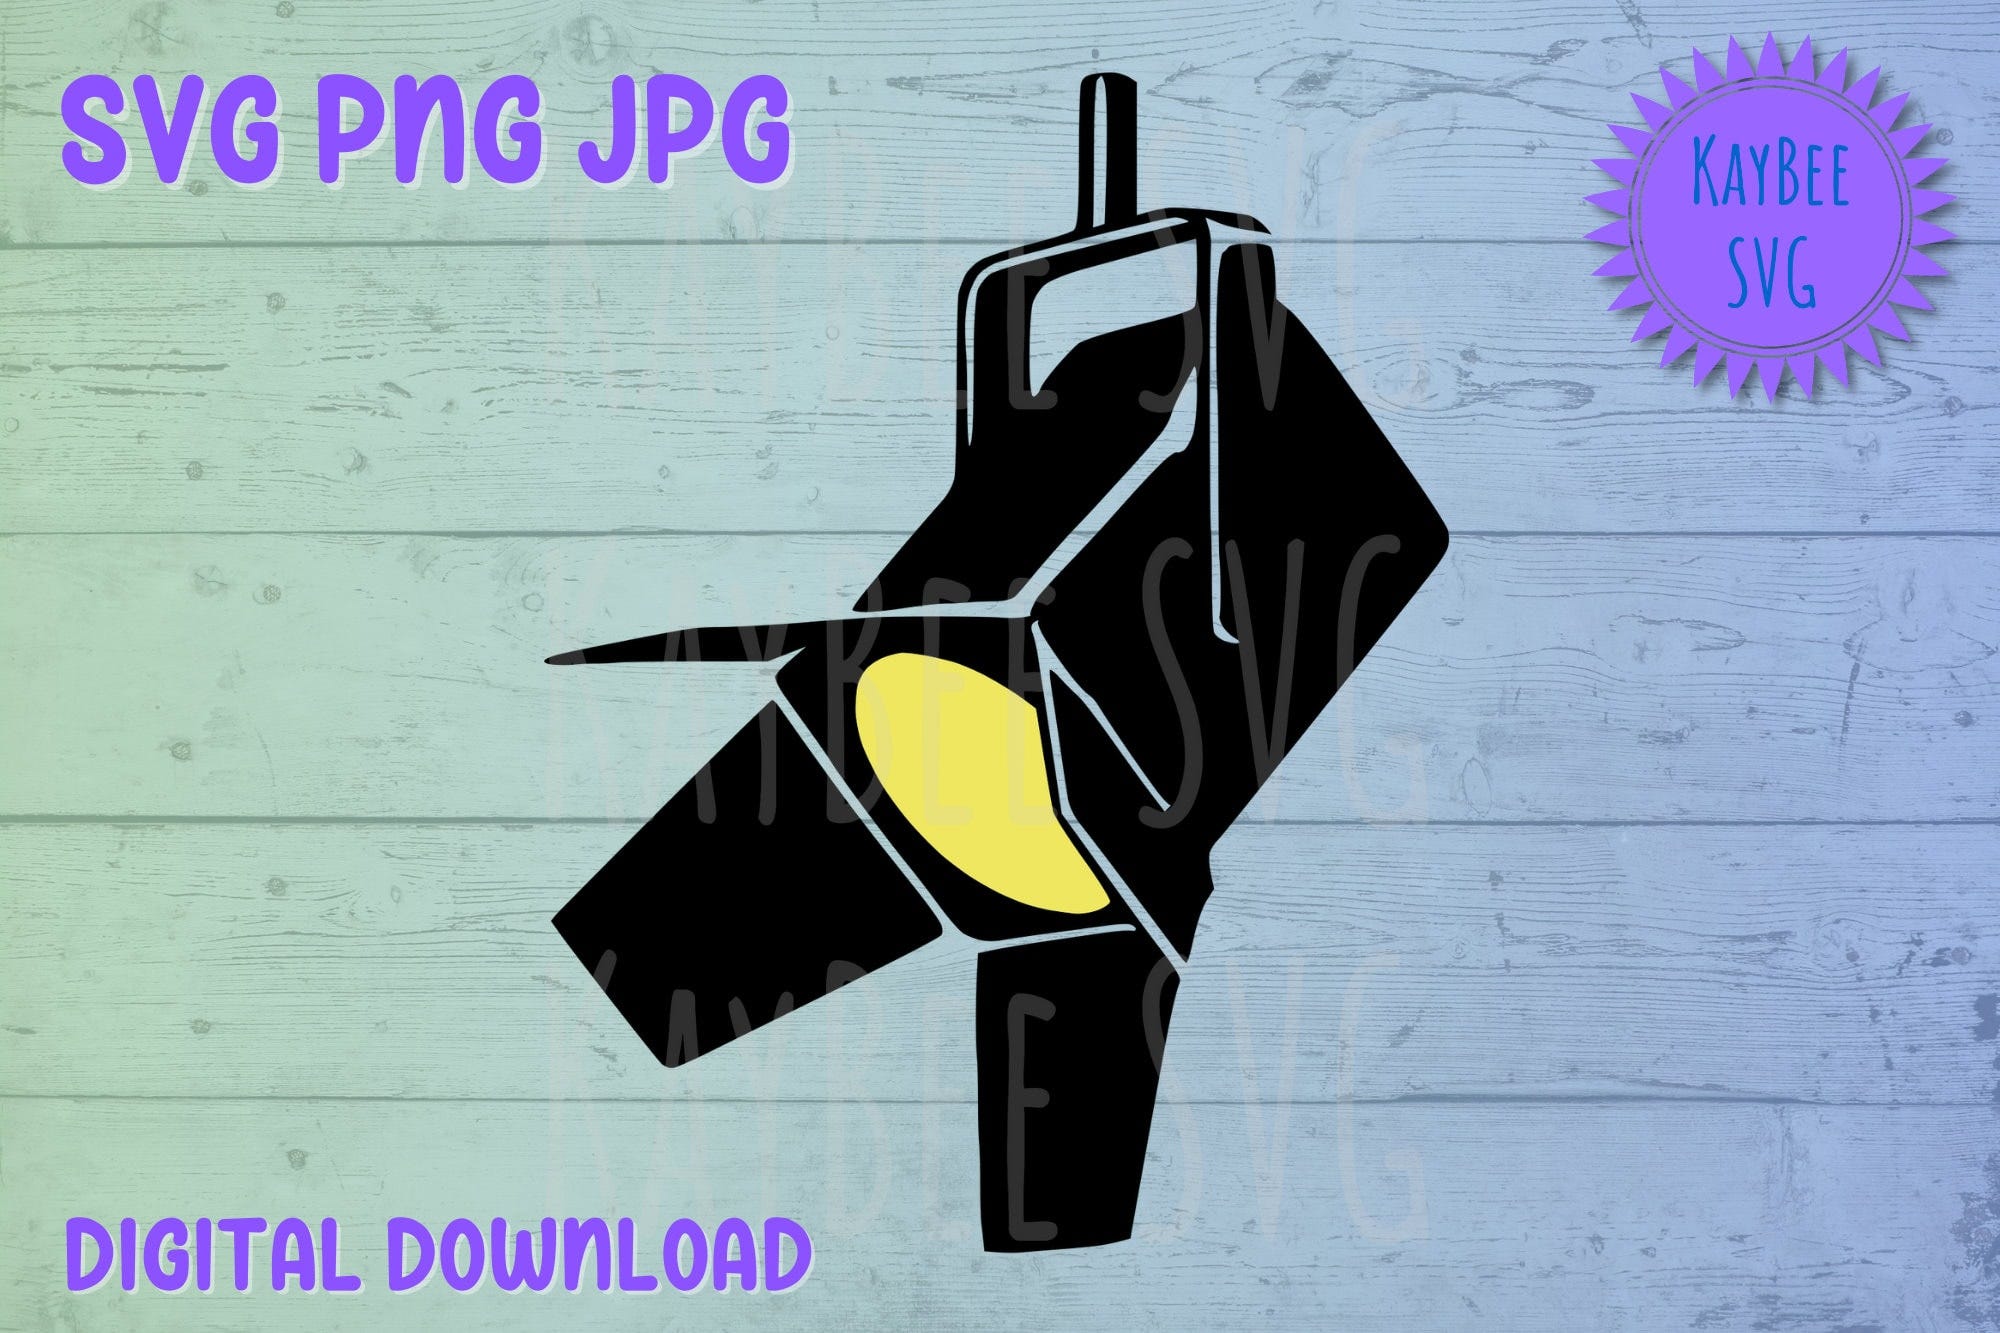 Spotlight SVG PNG JPG Clipart Digital Cut File Download for Cricut Silhouette Sublimation Printable Art - Commercial Use